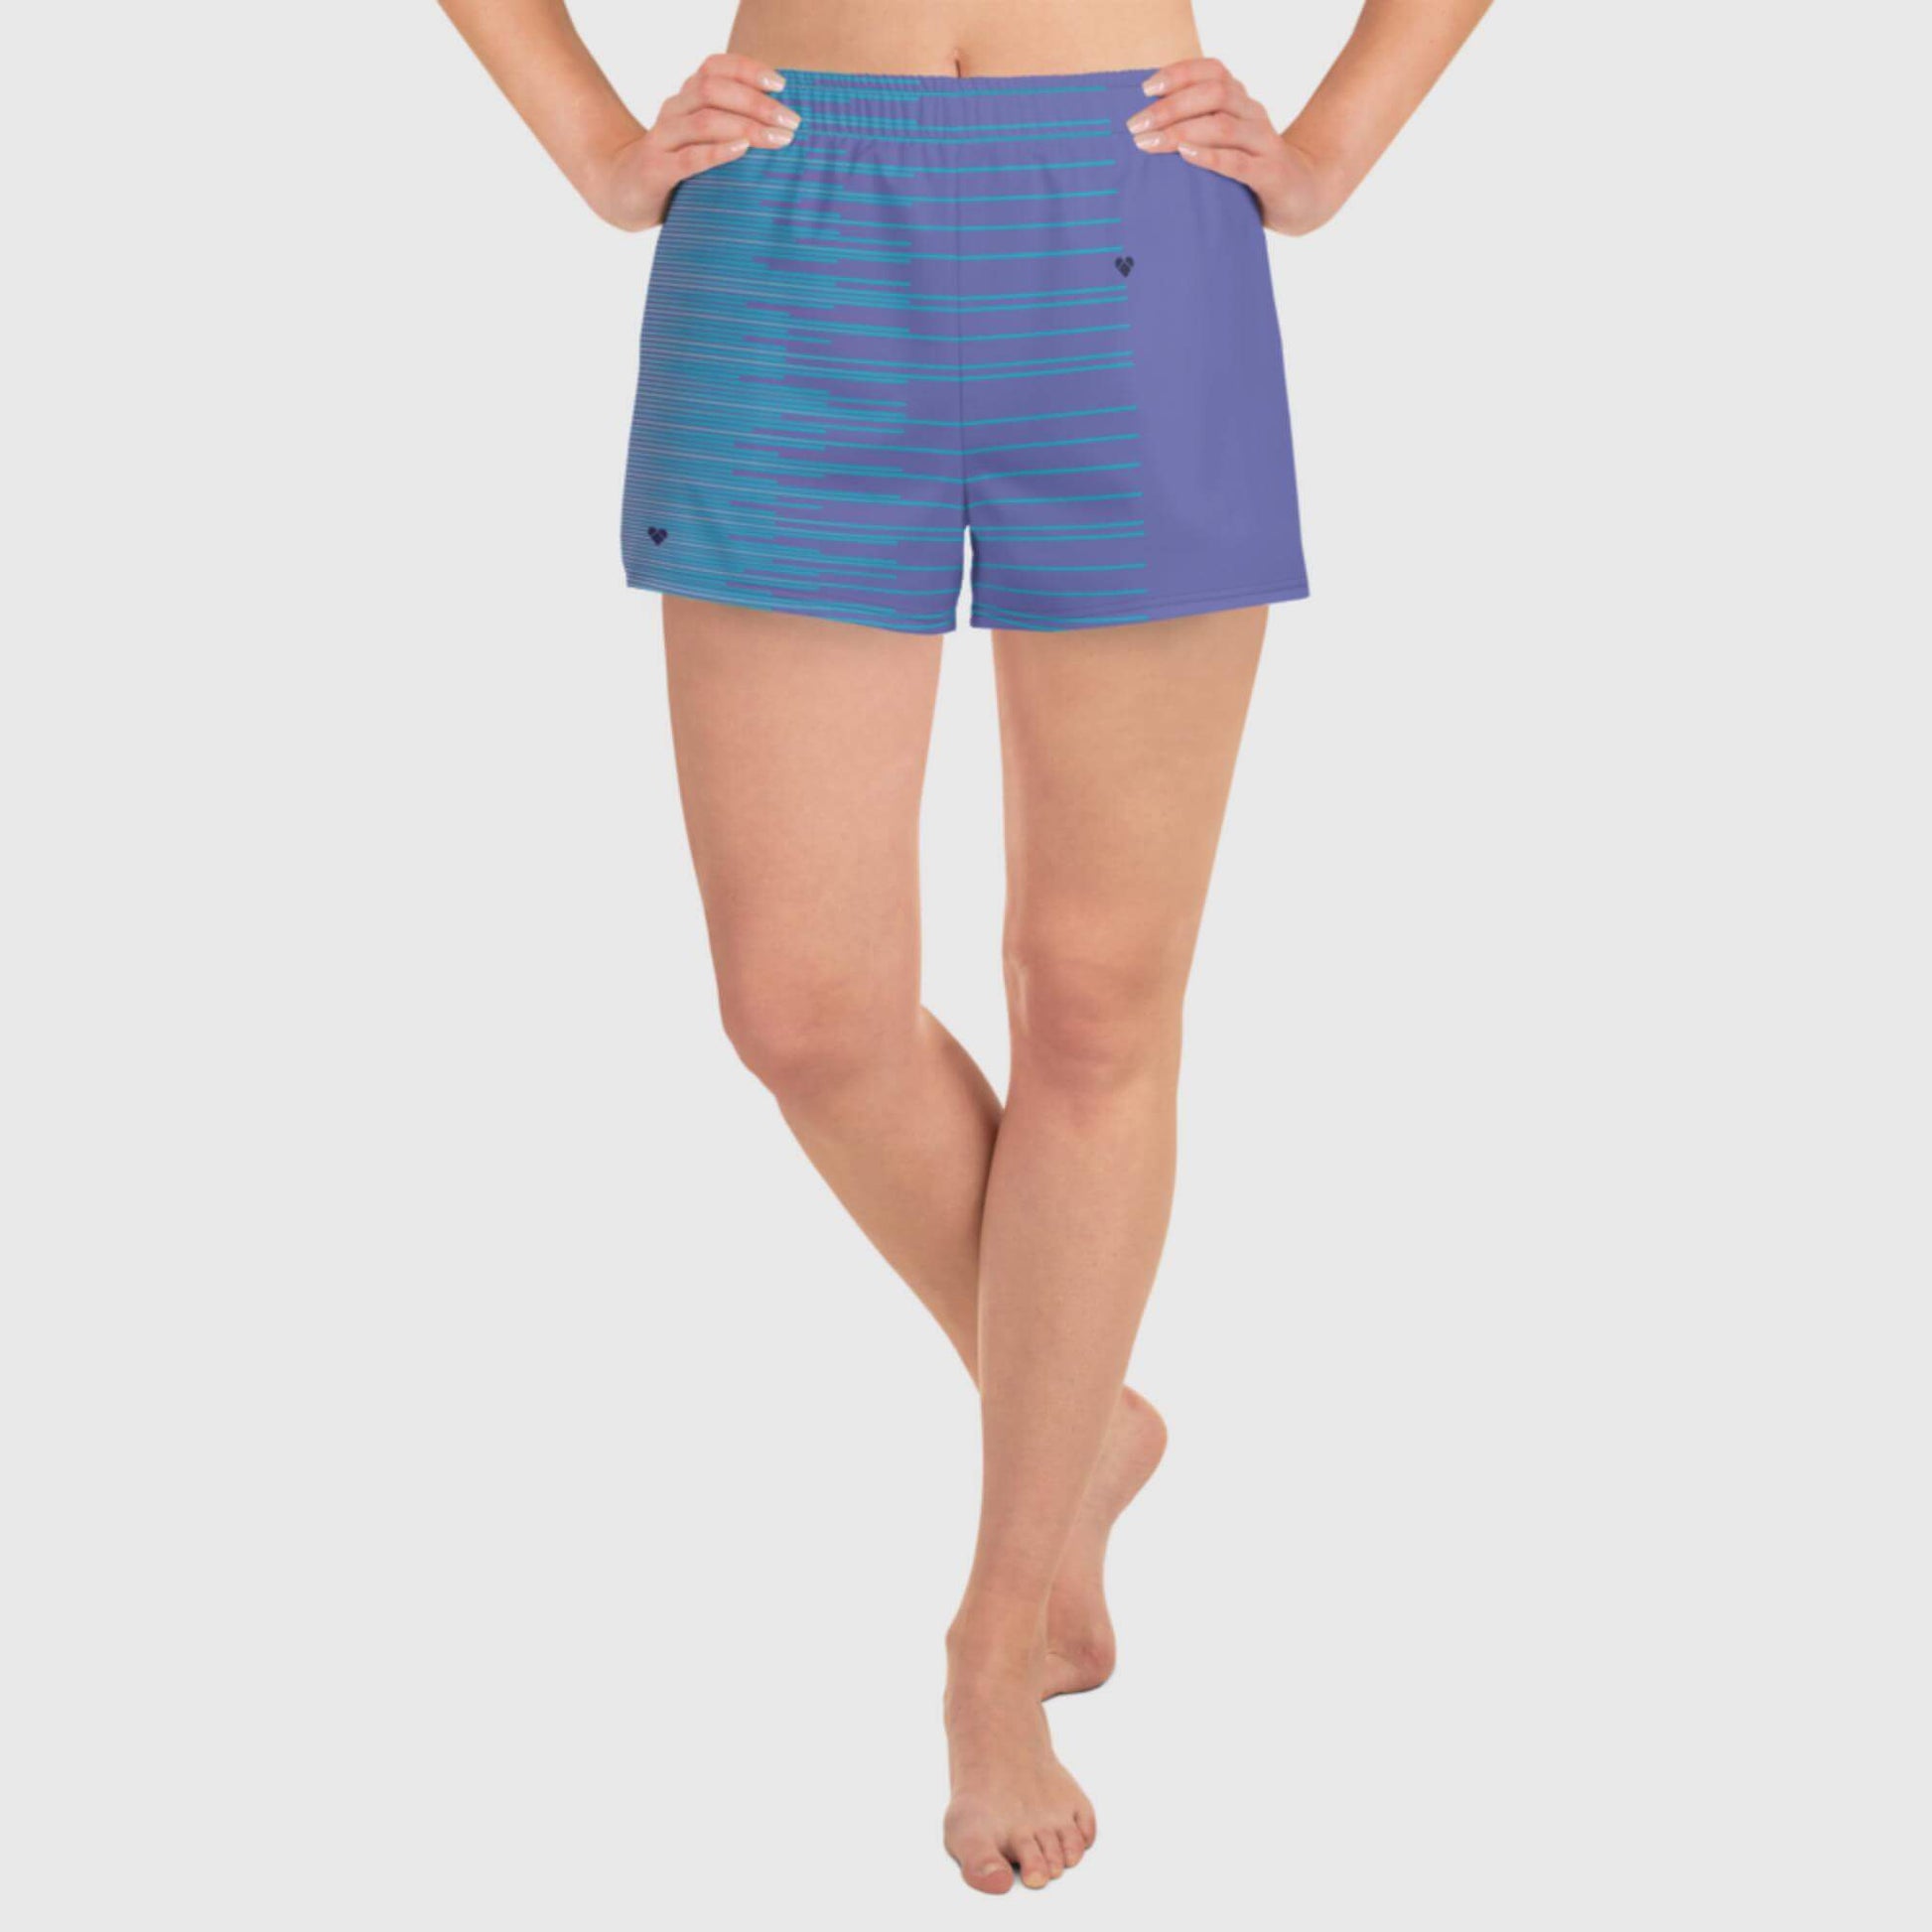 Stylish Periwinkle Stripes Dual Sport Shorts for Women - CRiZ AMOR